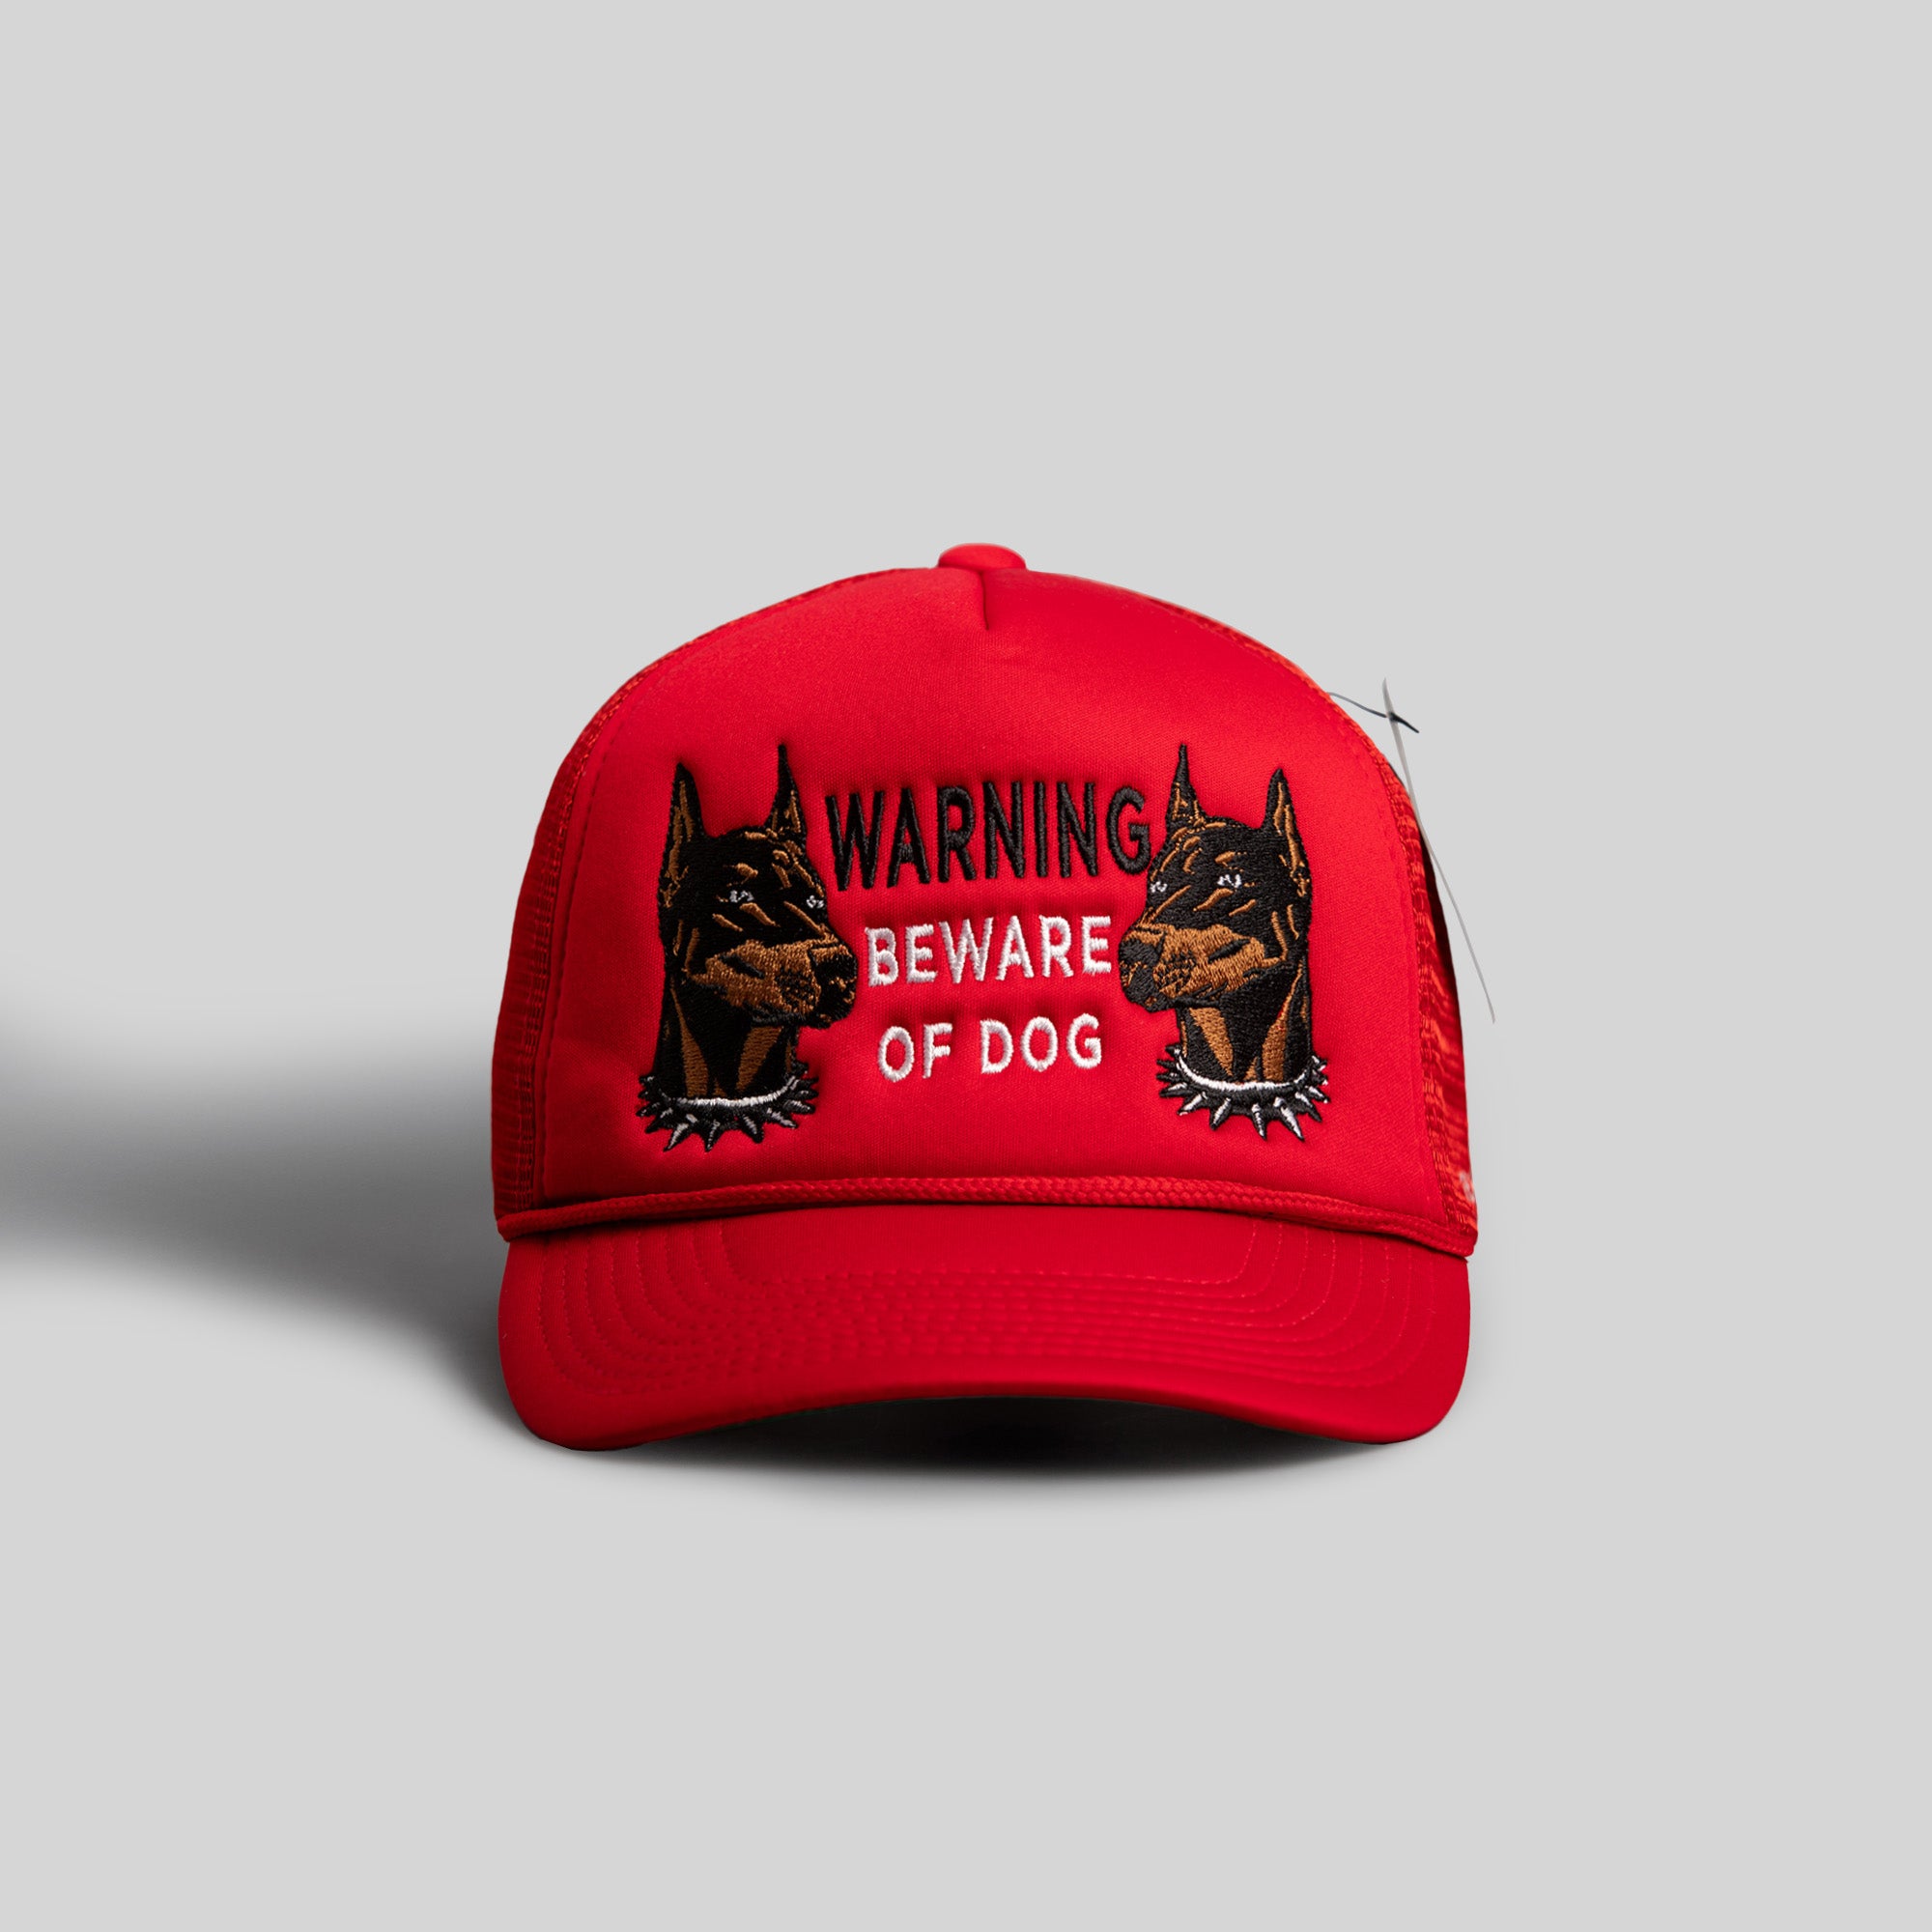 BEWARE OF DOG RED TRUCKER HAT